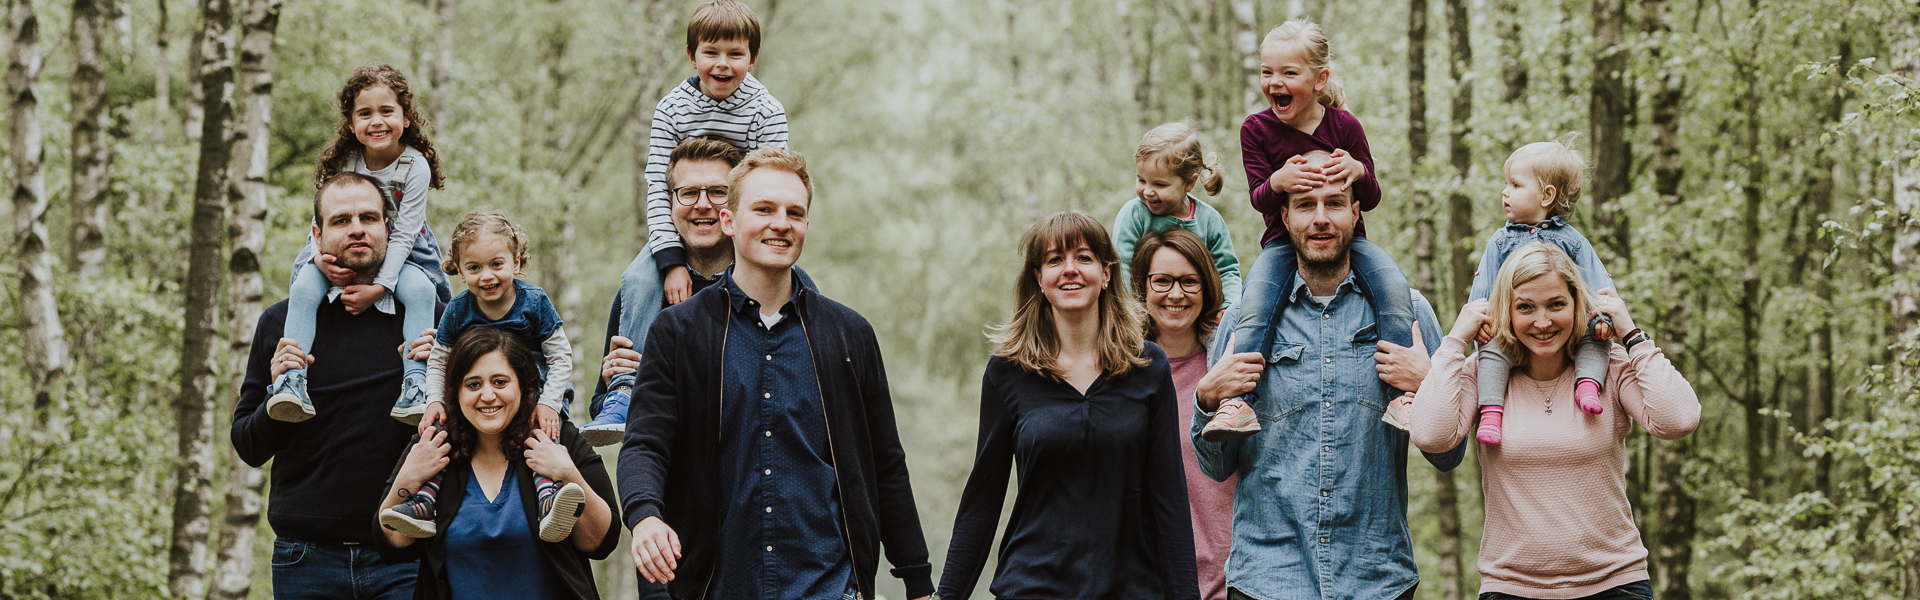 Familienfoto Farbfoto Waldspaziergang Oberhausen